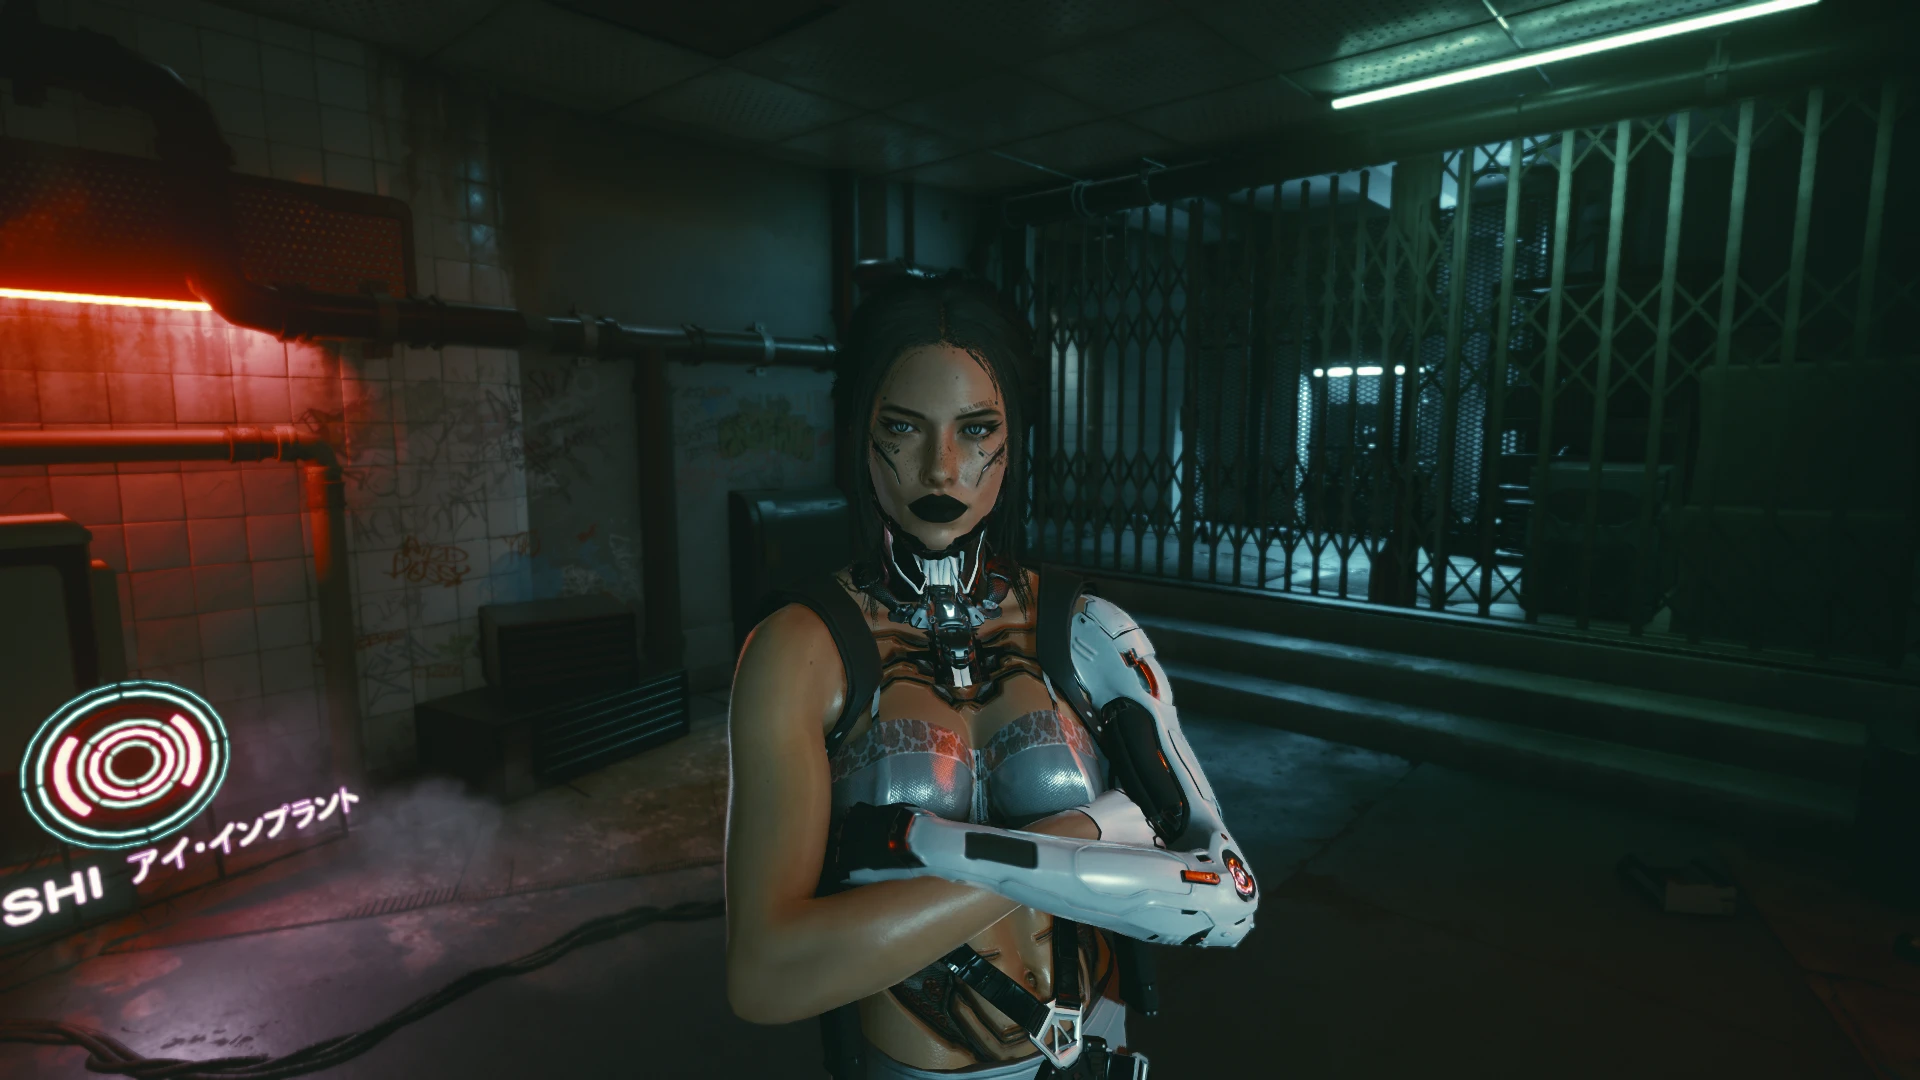 Cyborg Girl At Cyberpunk 2077 Nexus Mods And Community